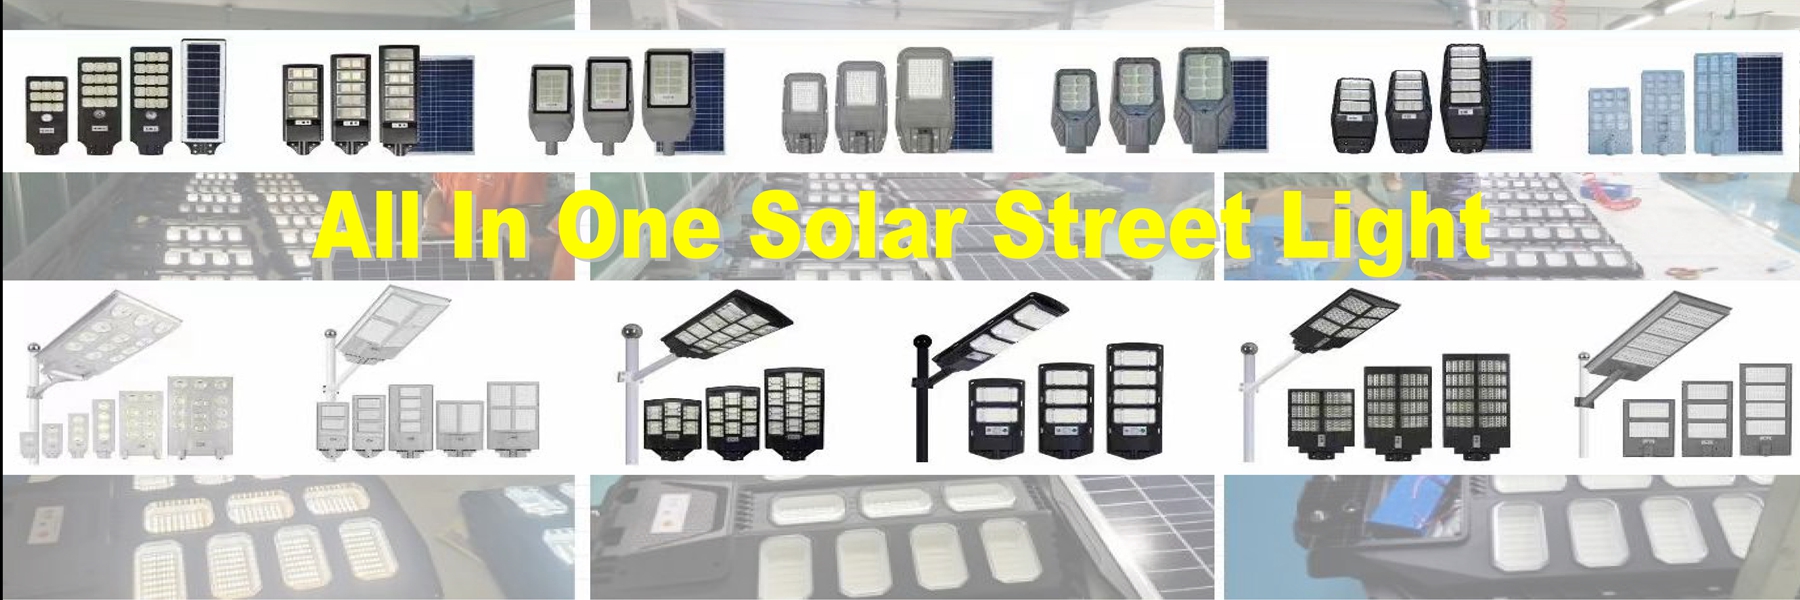 All in One Solar Street Light